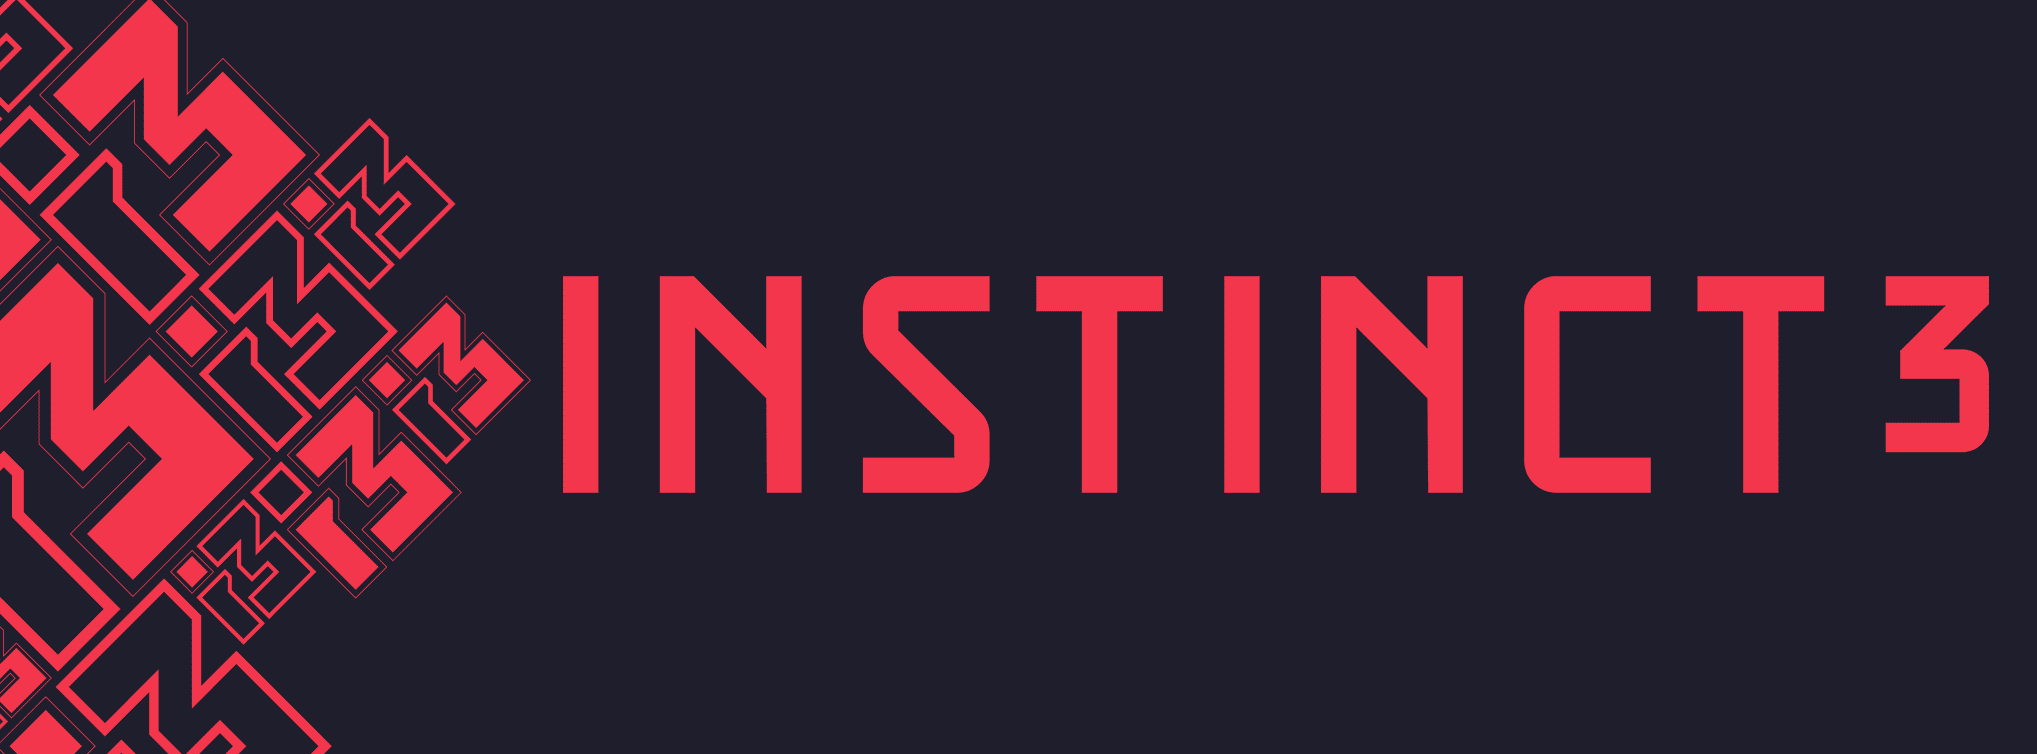 instinct3 banner